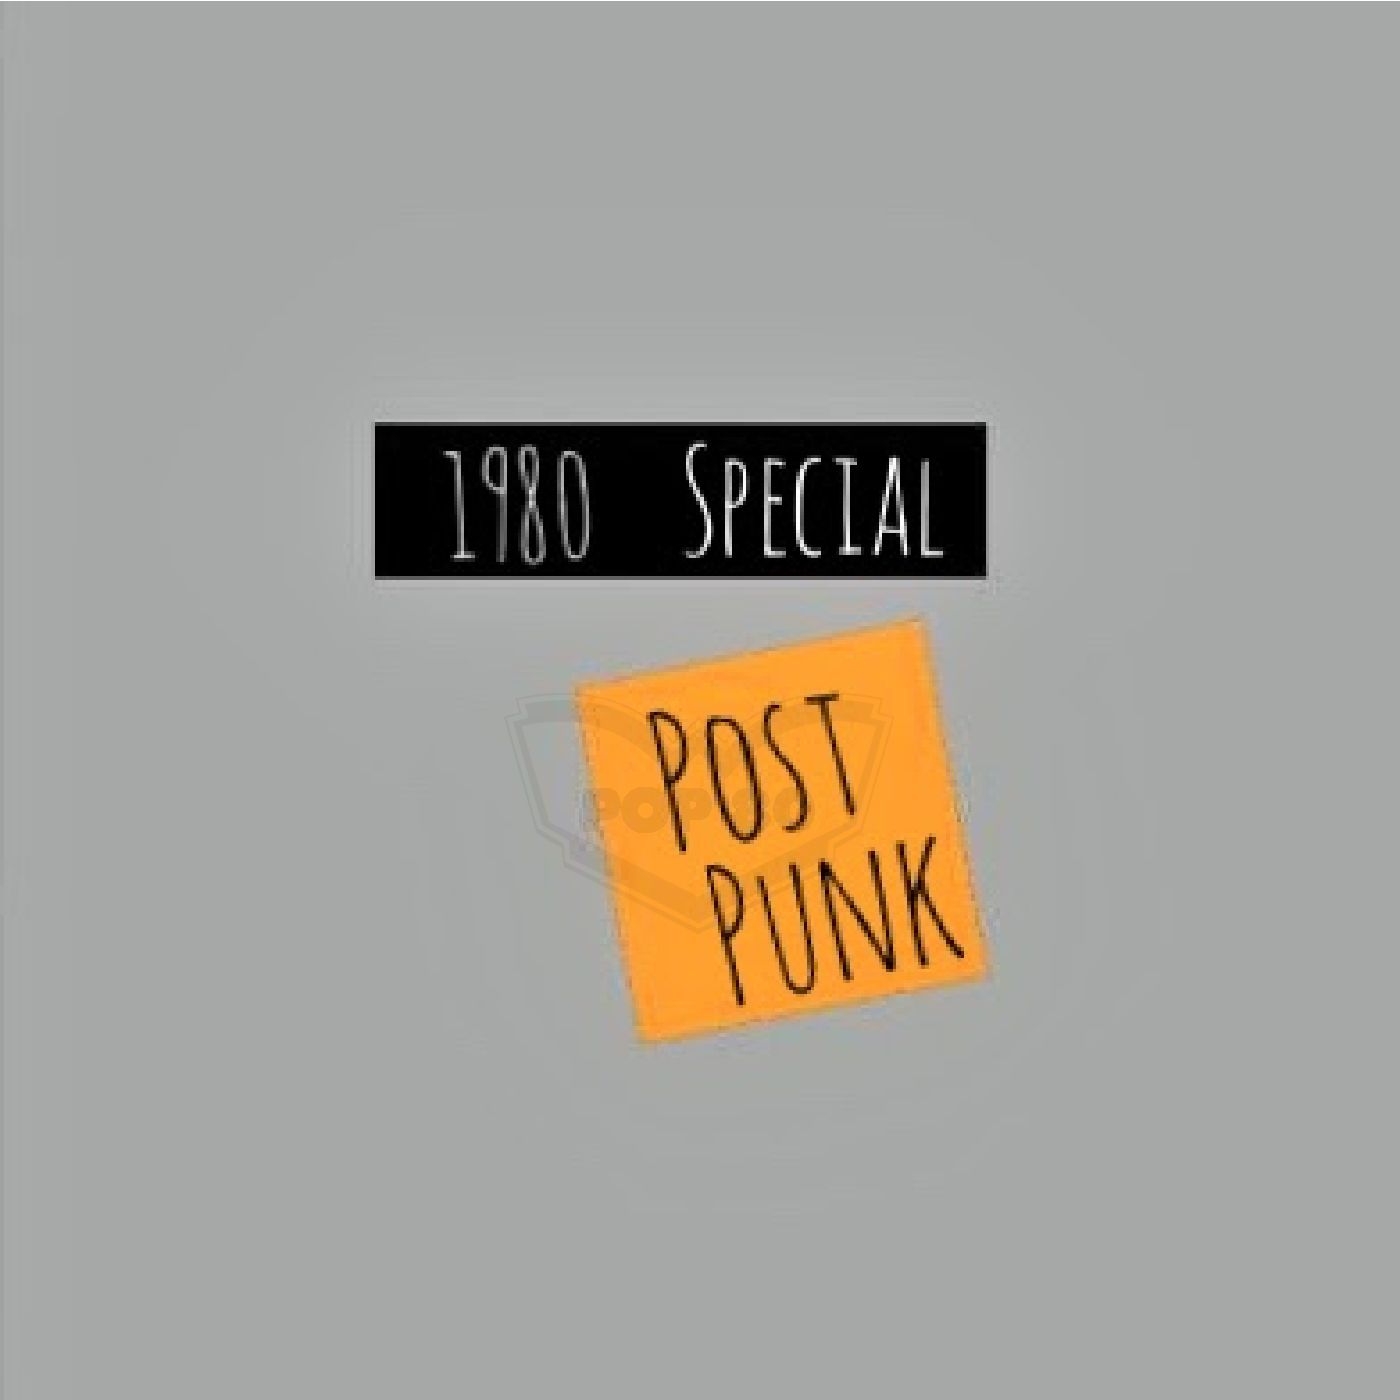 Rock 80 - Post Punk and Alternative Rock - 1980